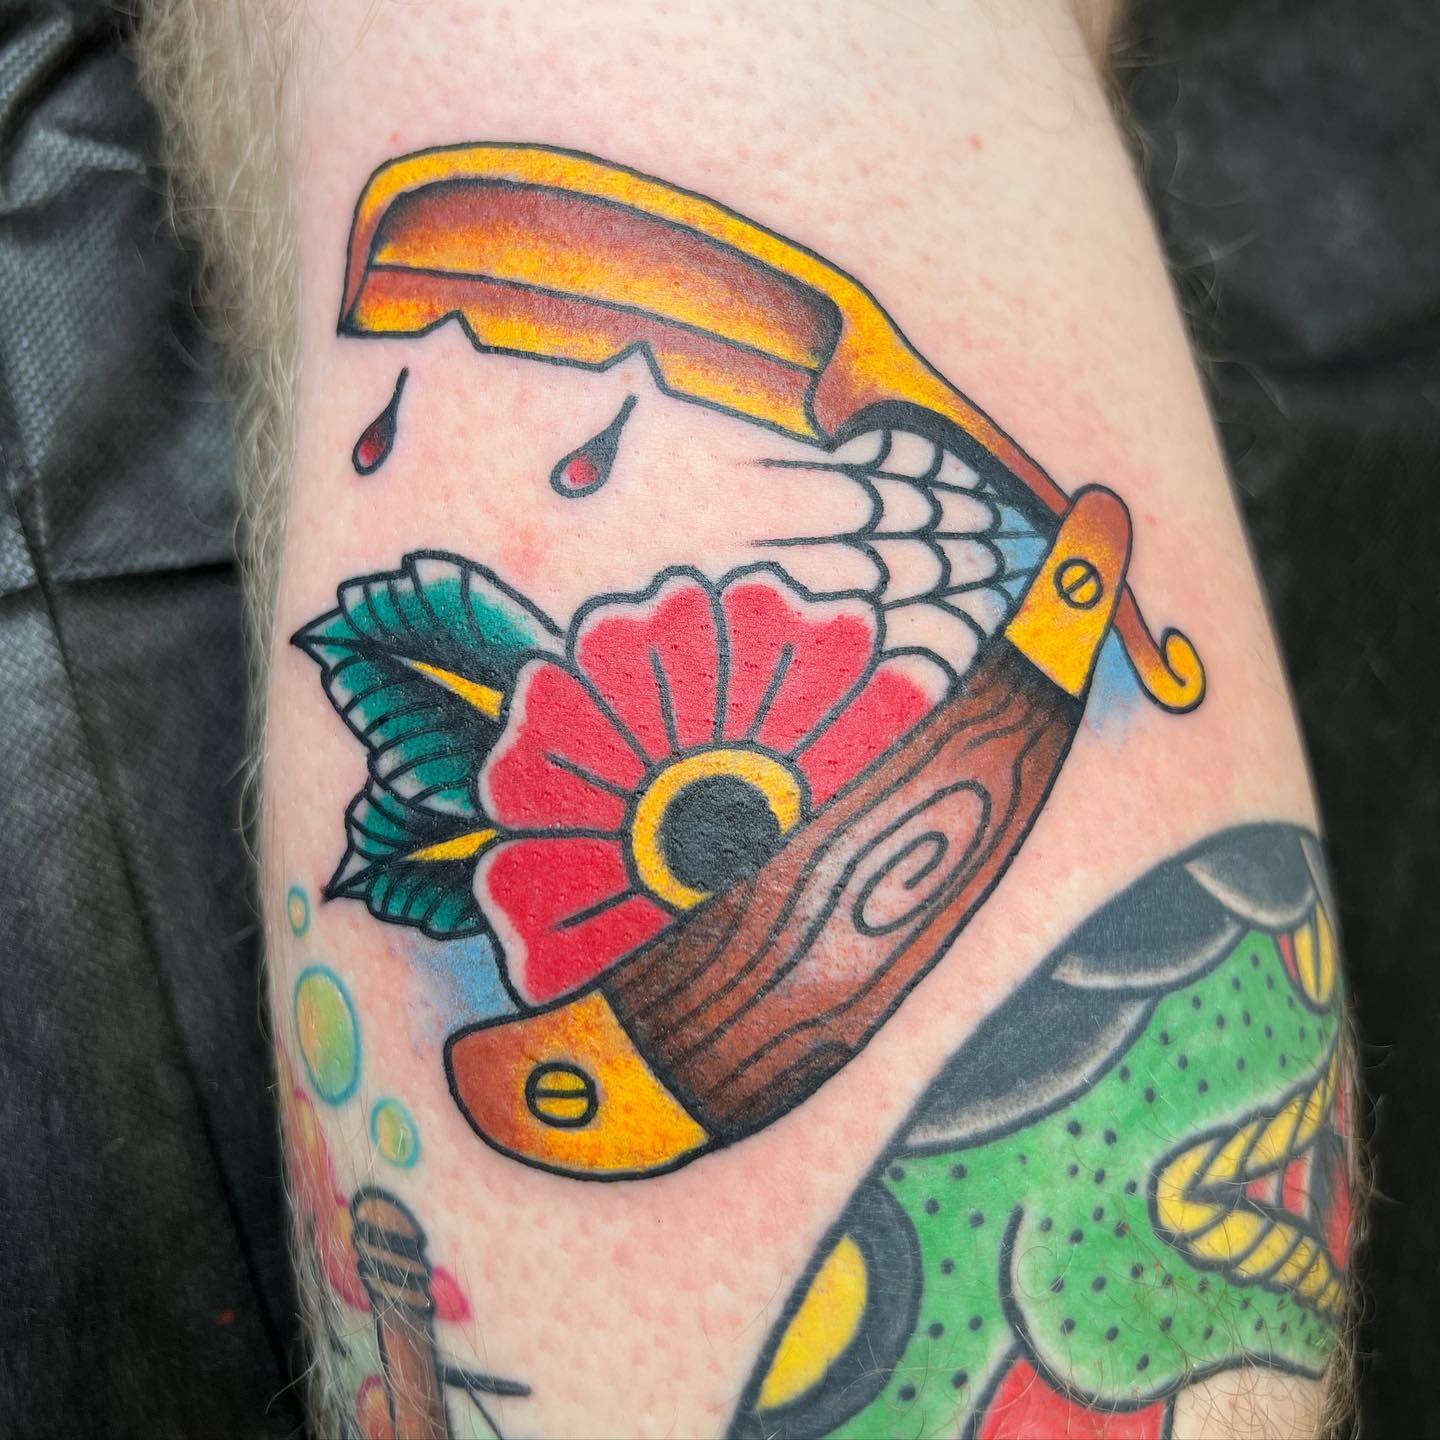 Colorful Arm Tattoo